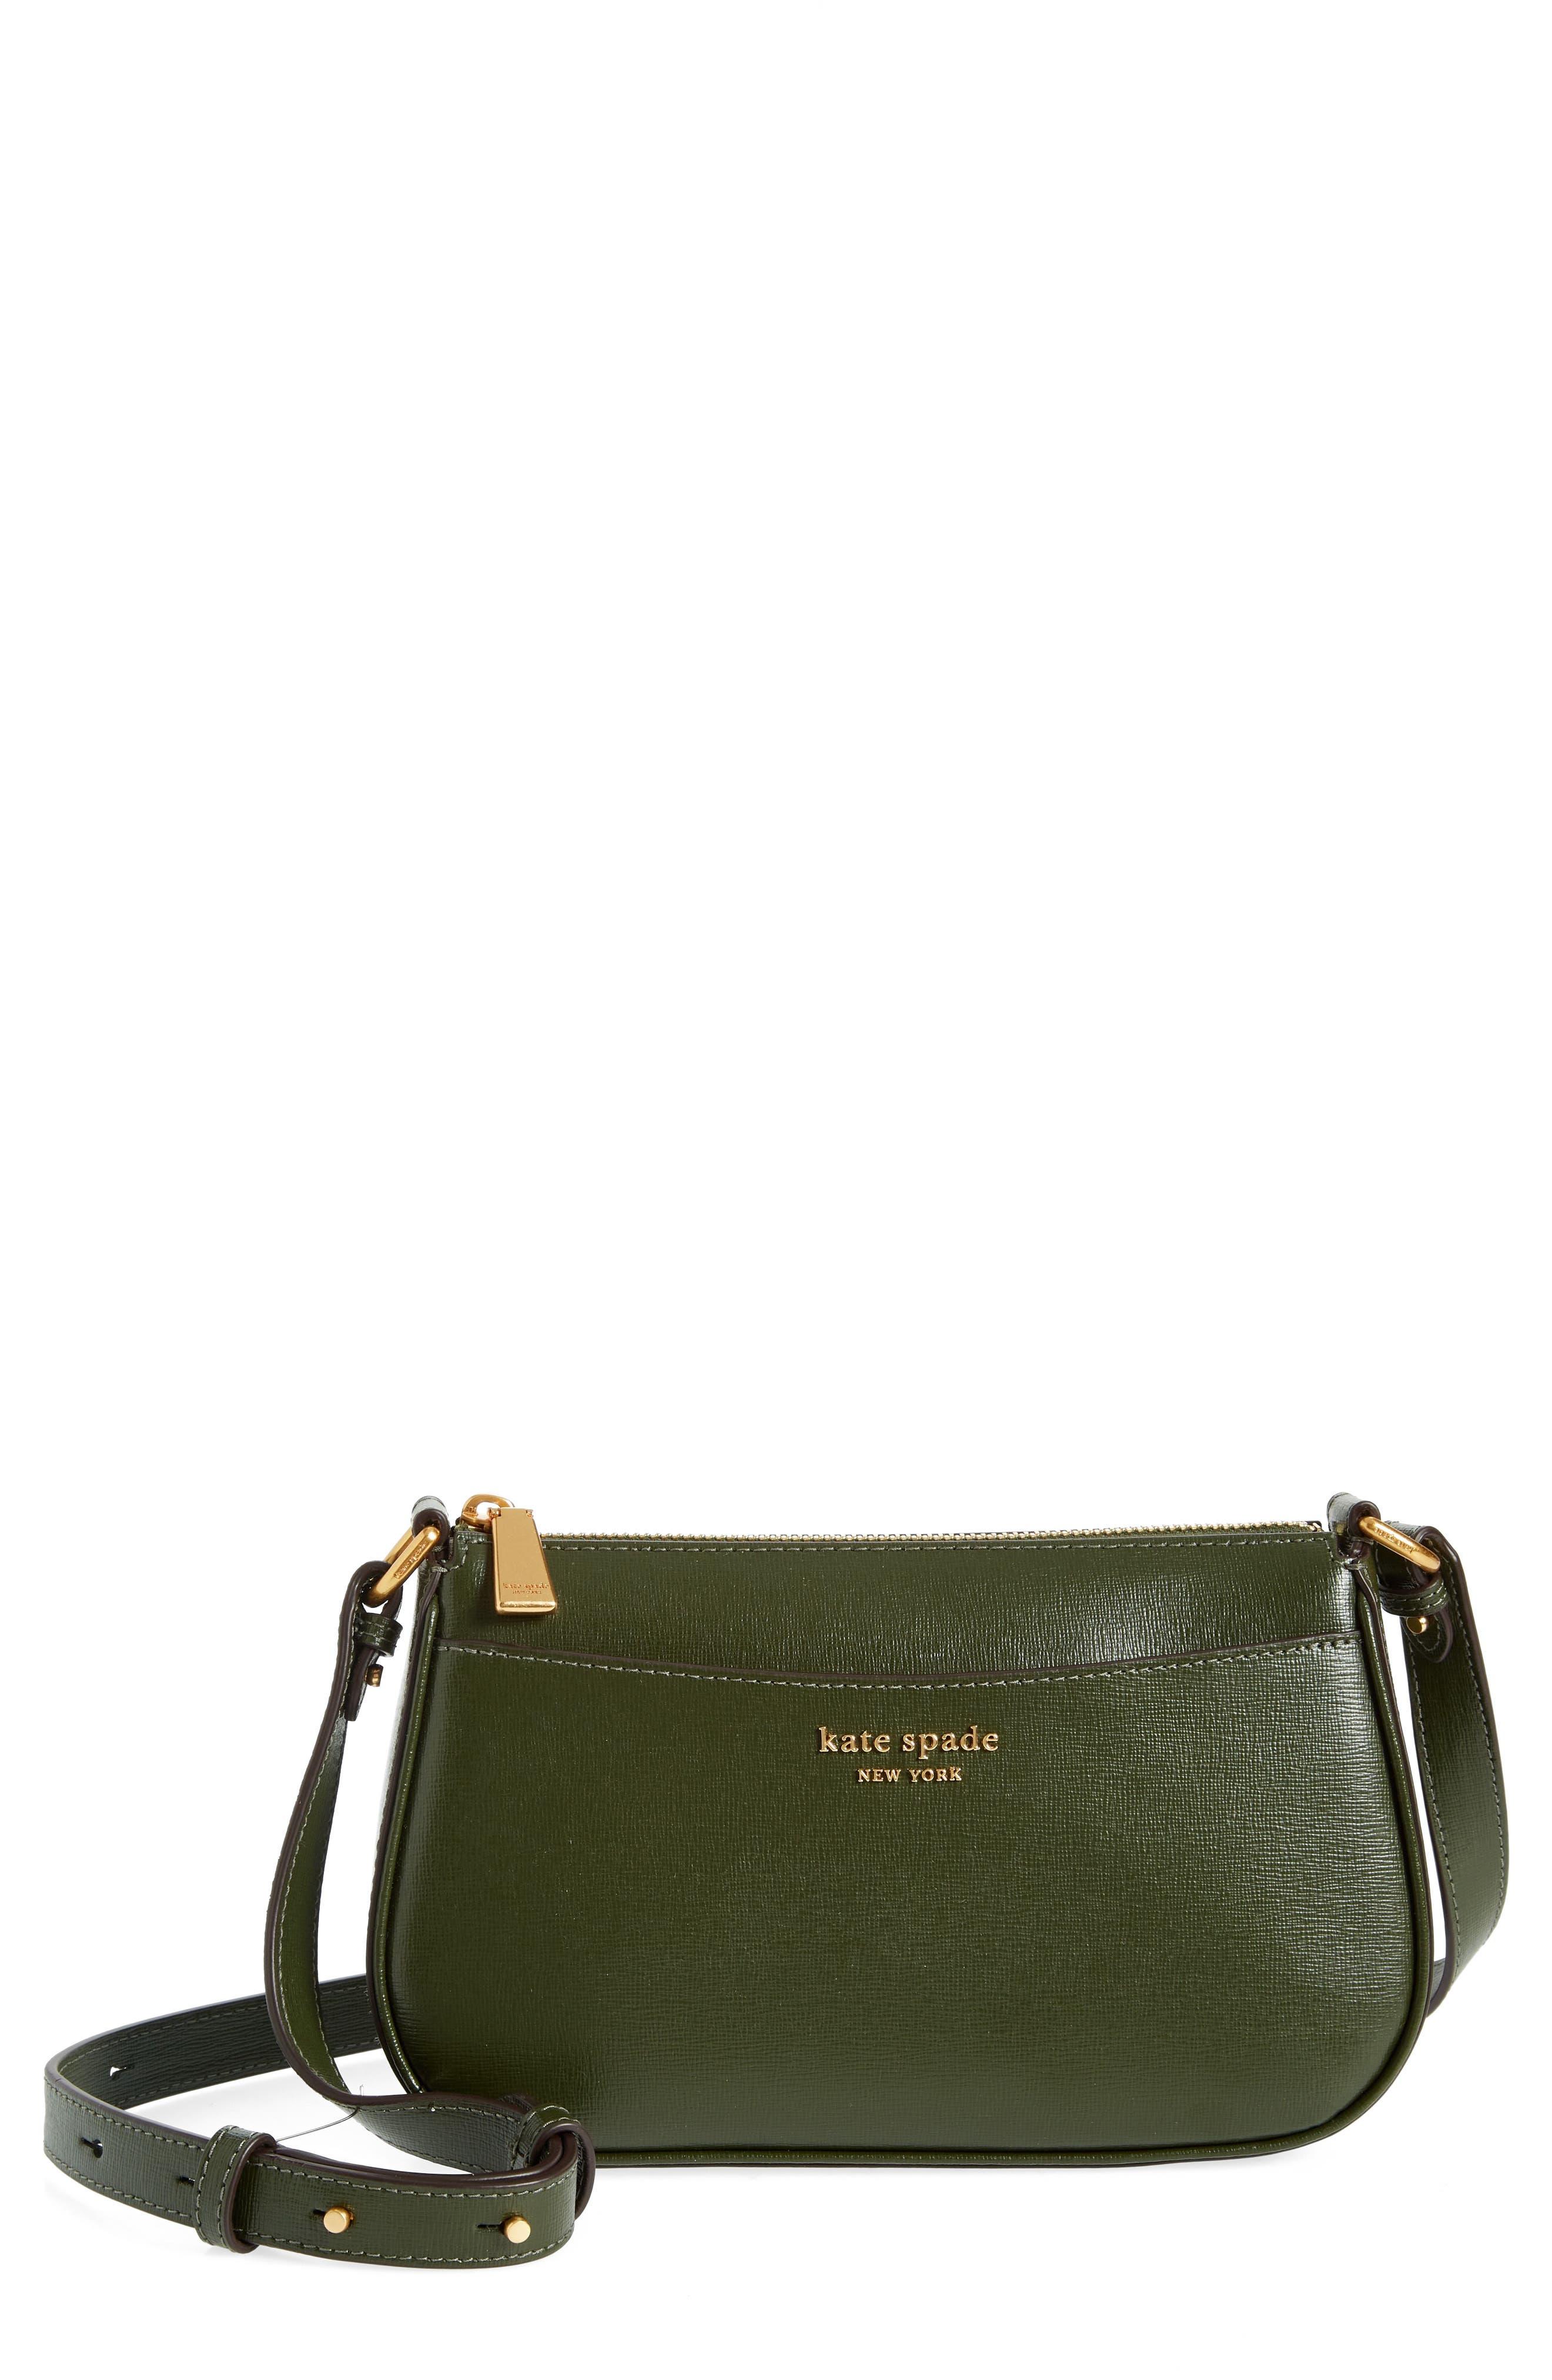 Kate Spade Small Bleecker Saffiano Leather Crossbody Bag in Green